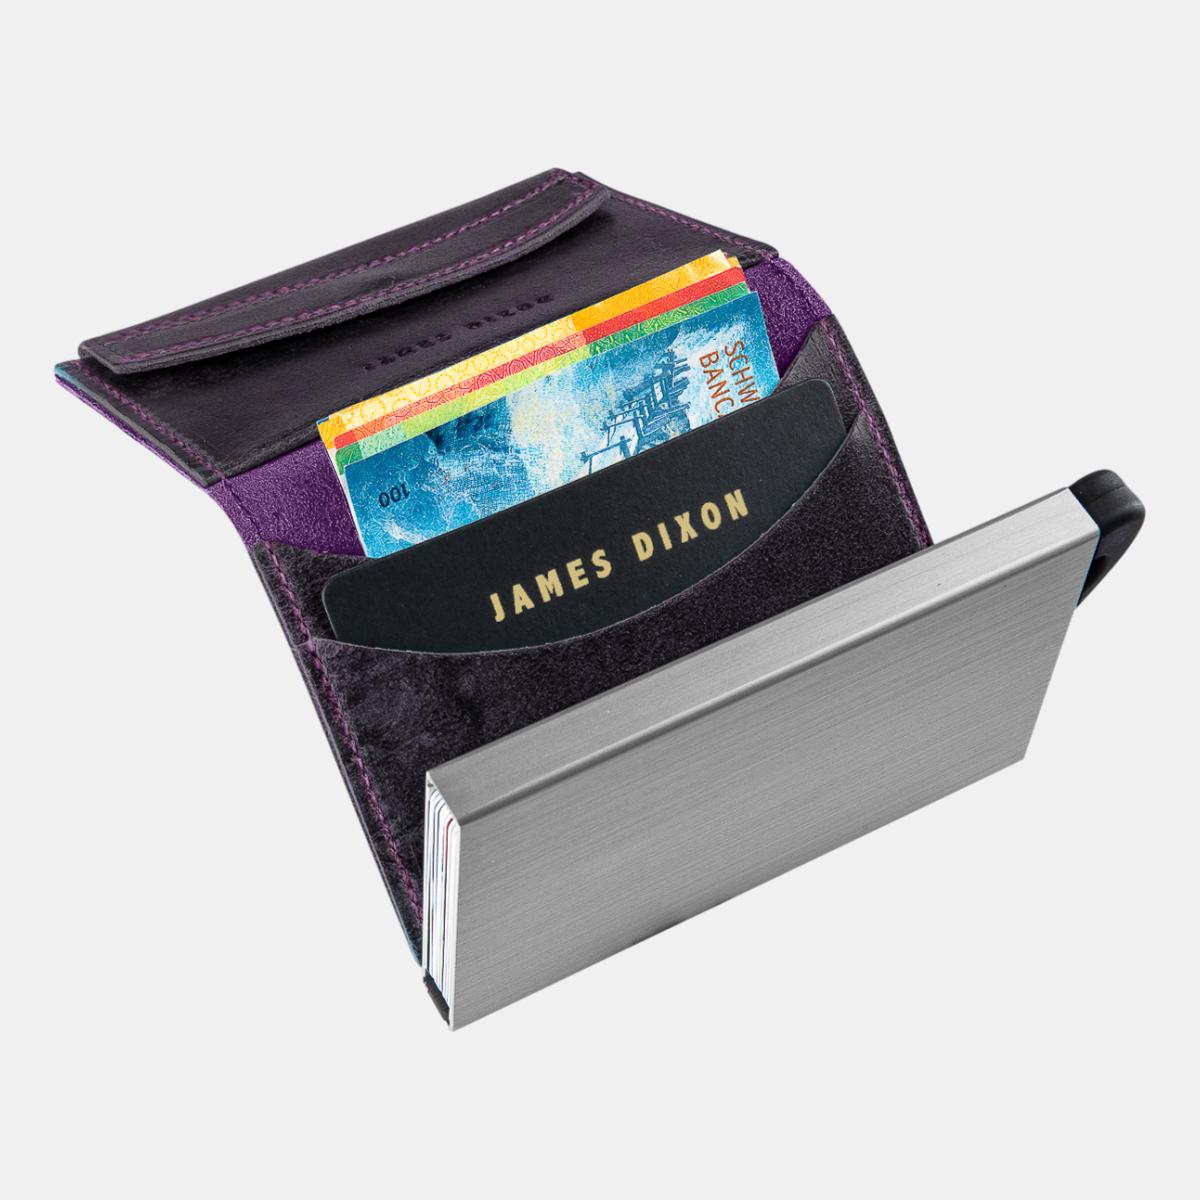 jd0315 james dixon puro raw purple coin pocket wallet notes